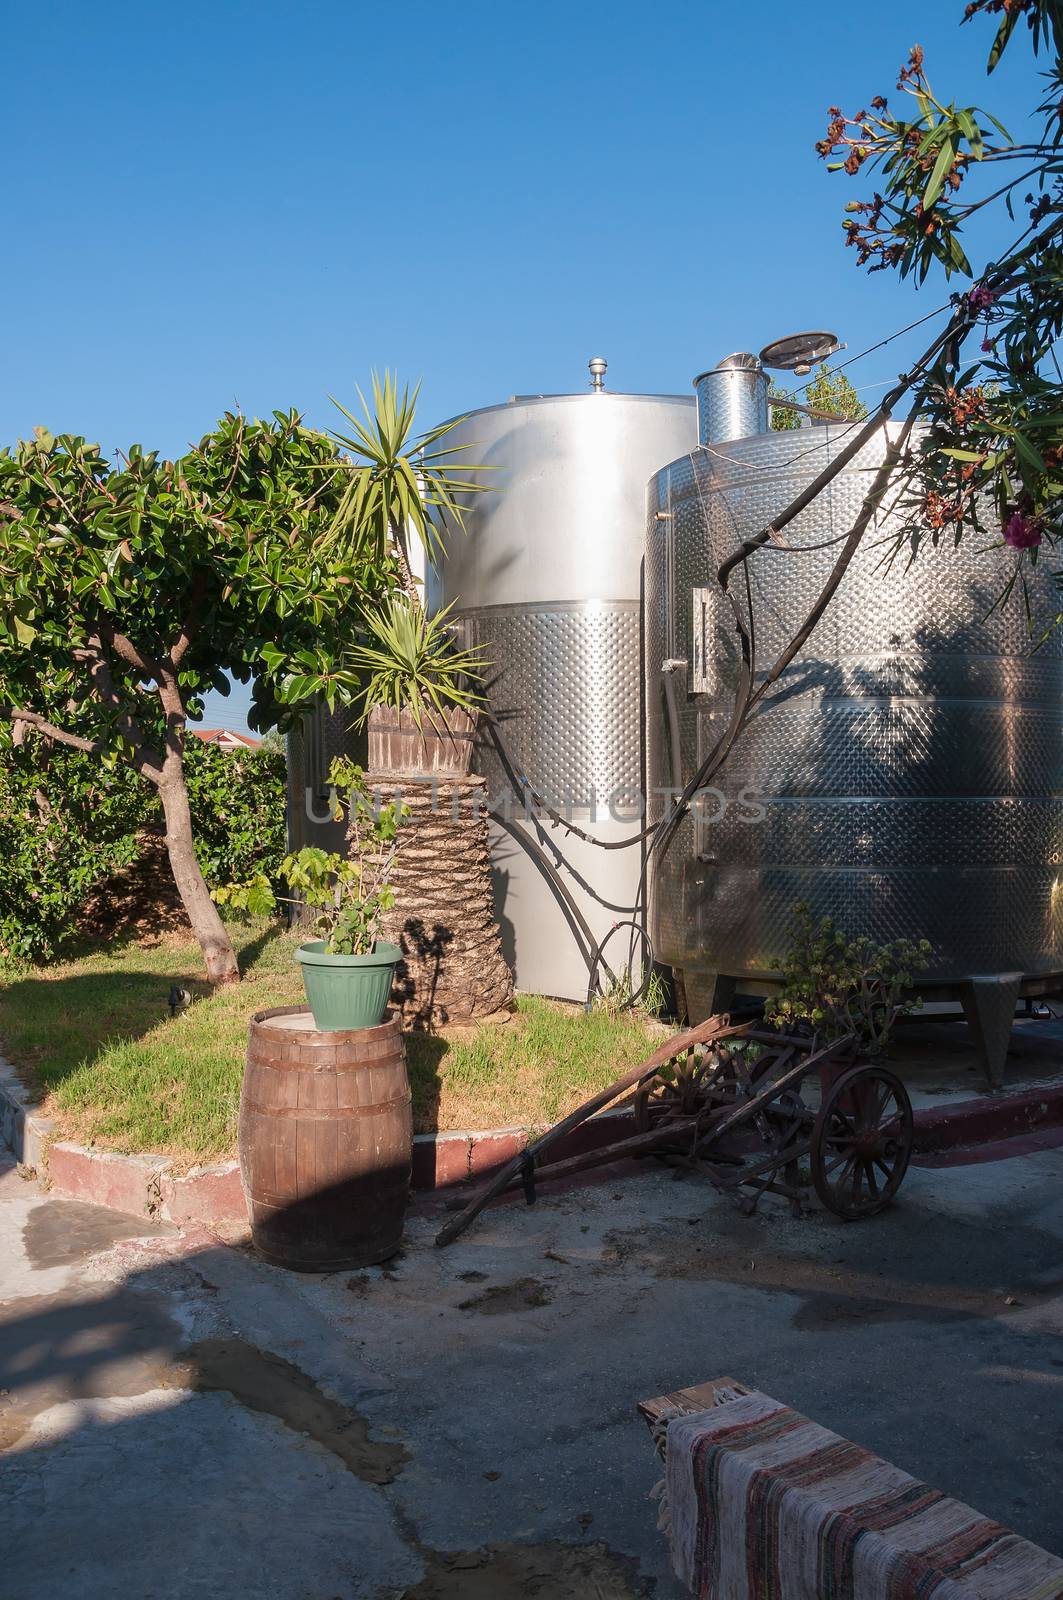 Steel silos for wine in a winery garden by mkos83